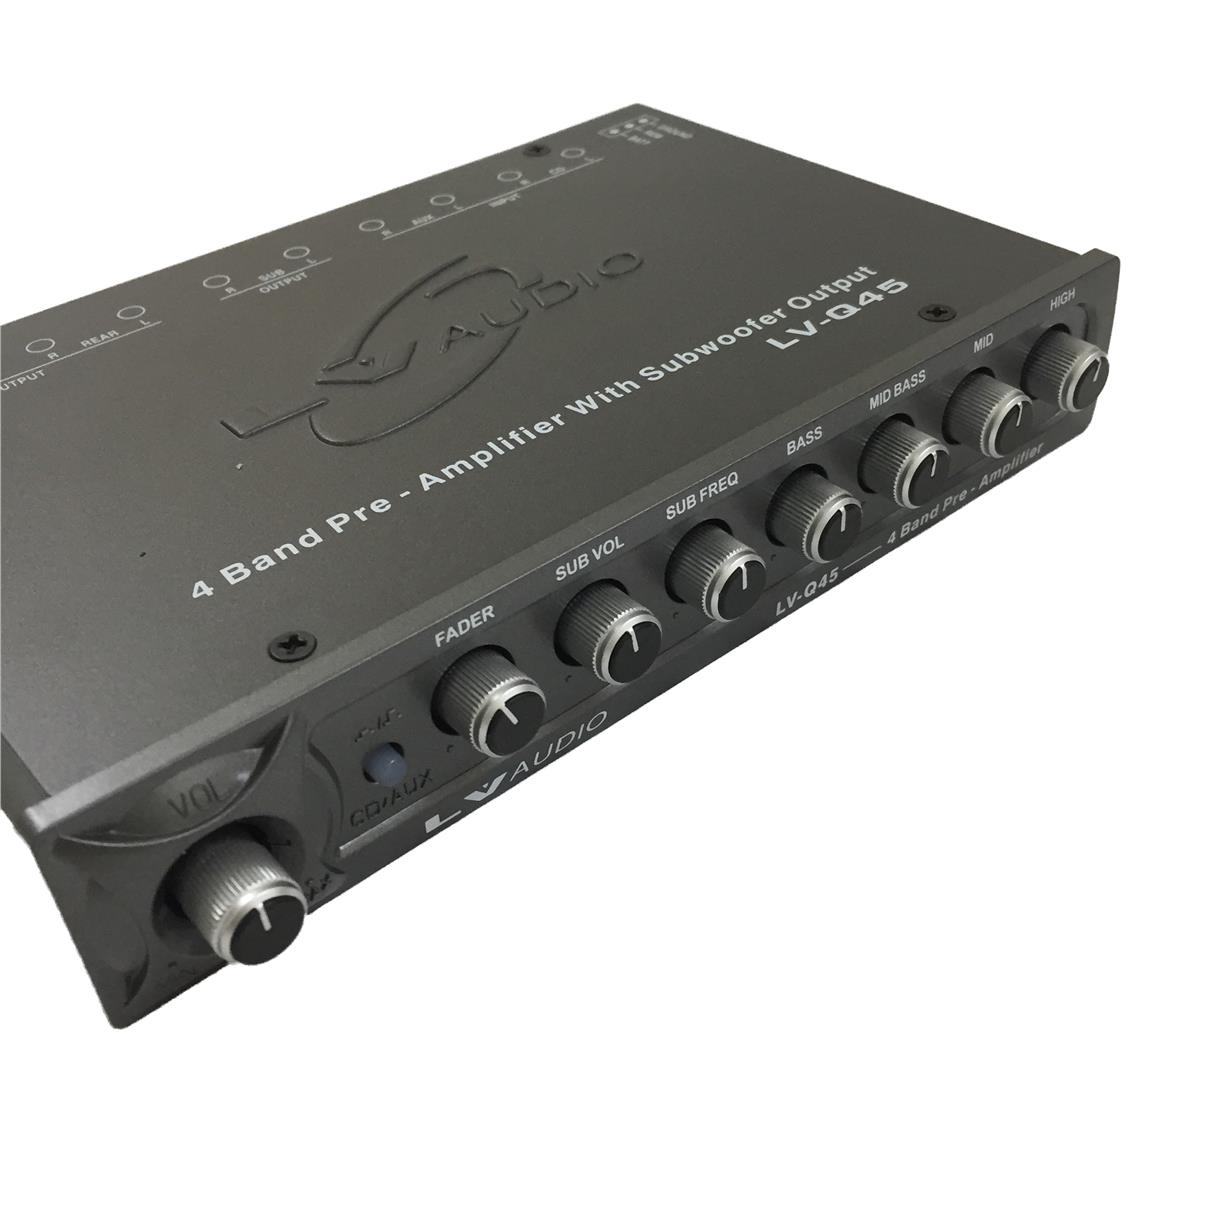 4 Band pre-amplifier LV-Q45